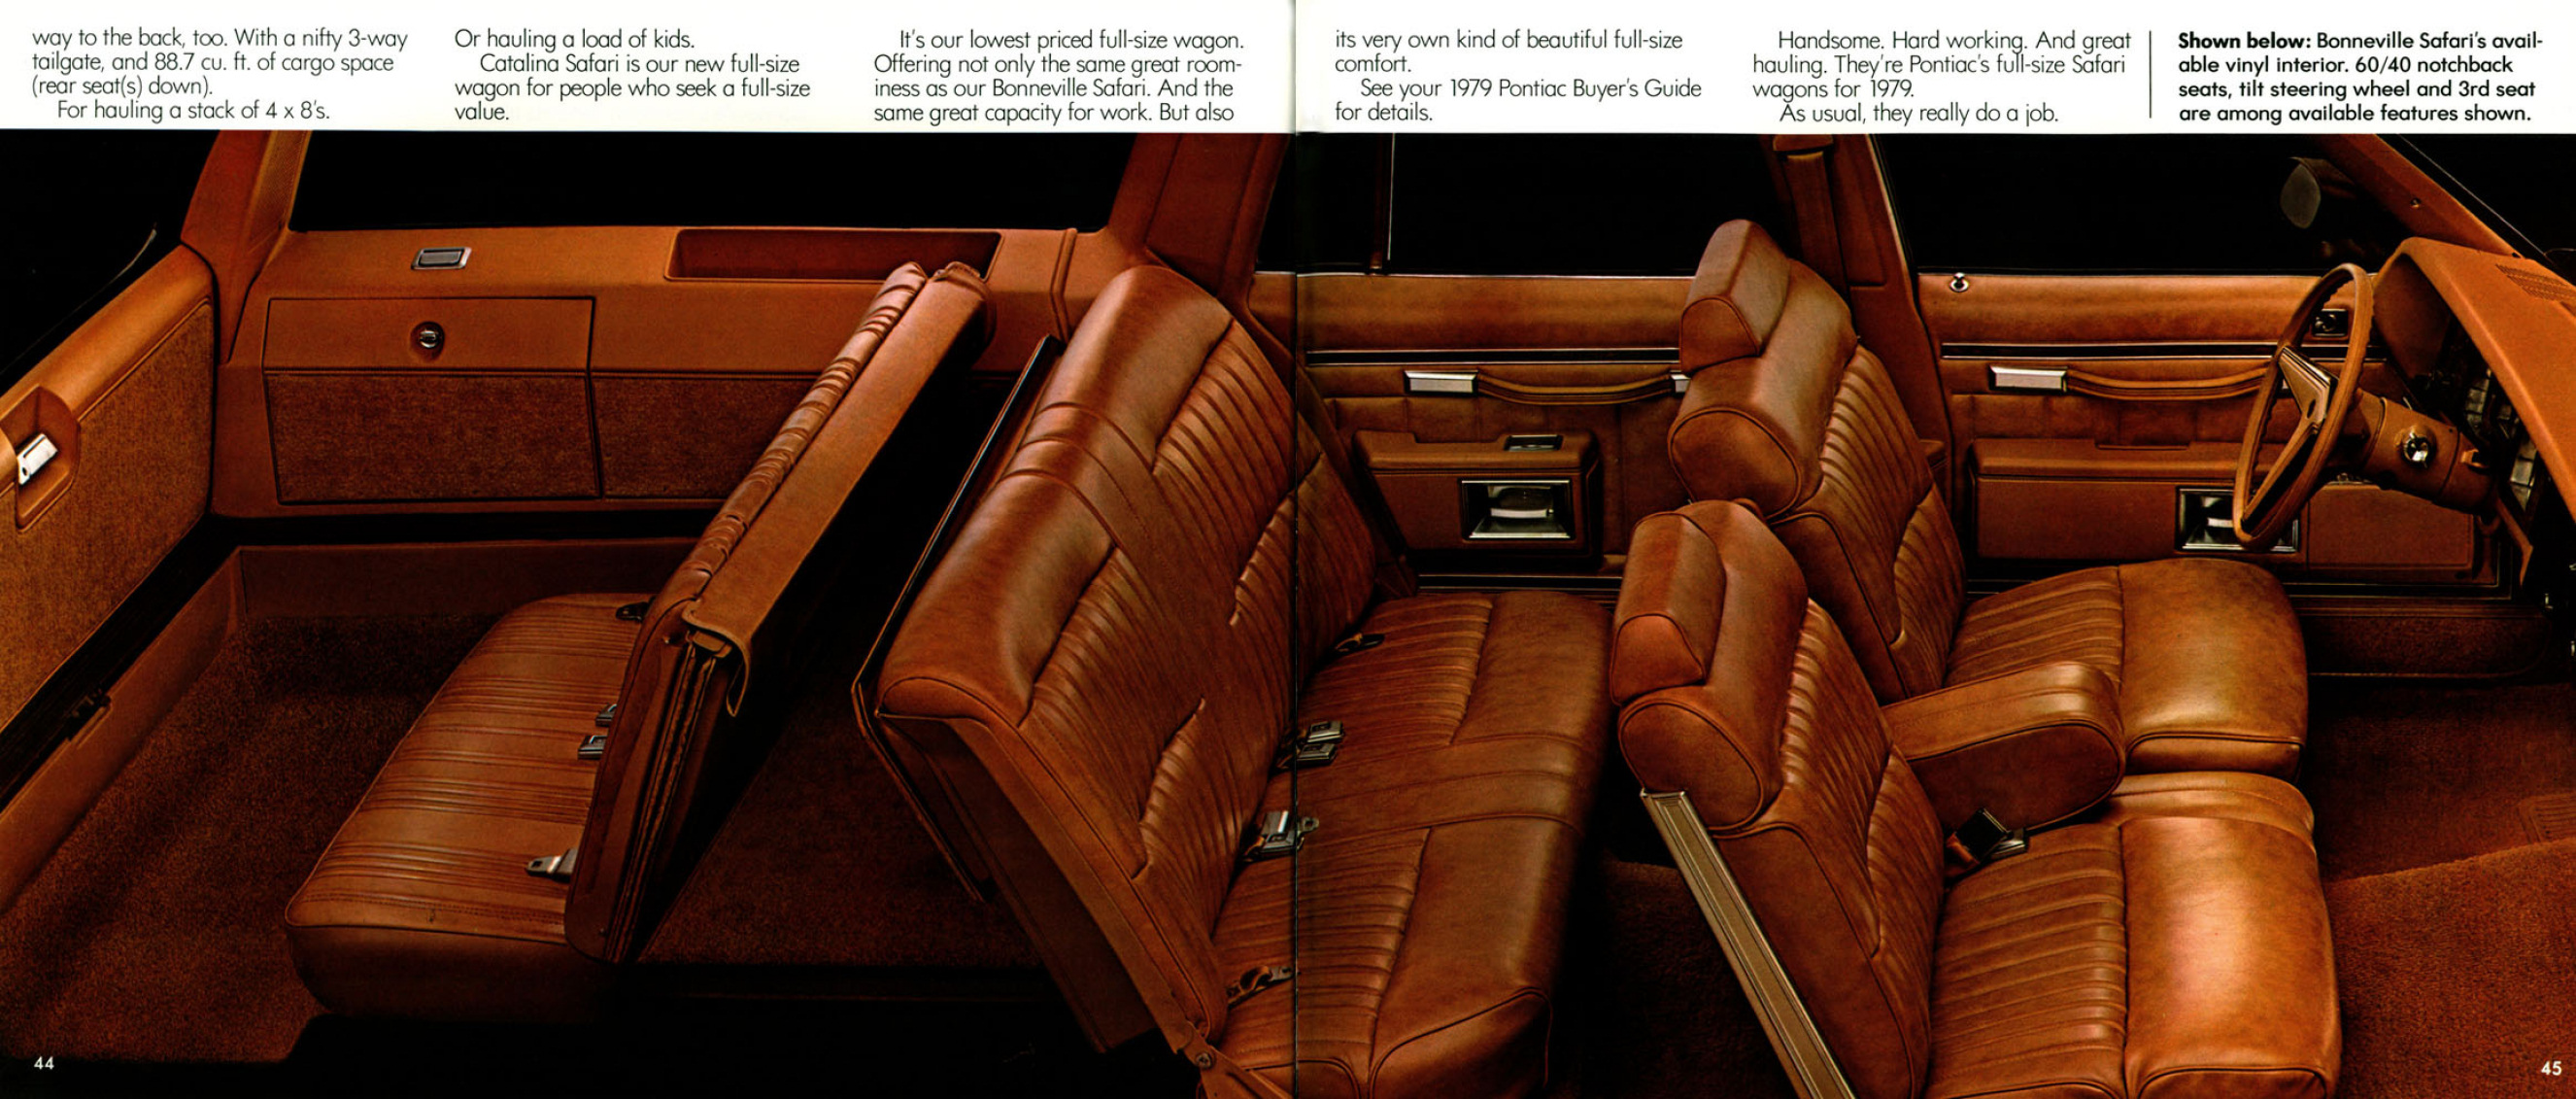 1979_Pontiac_Full_Line_Prestige-44-45